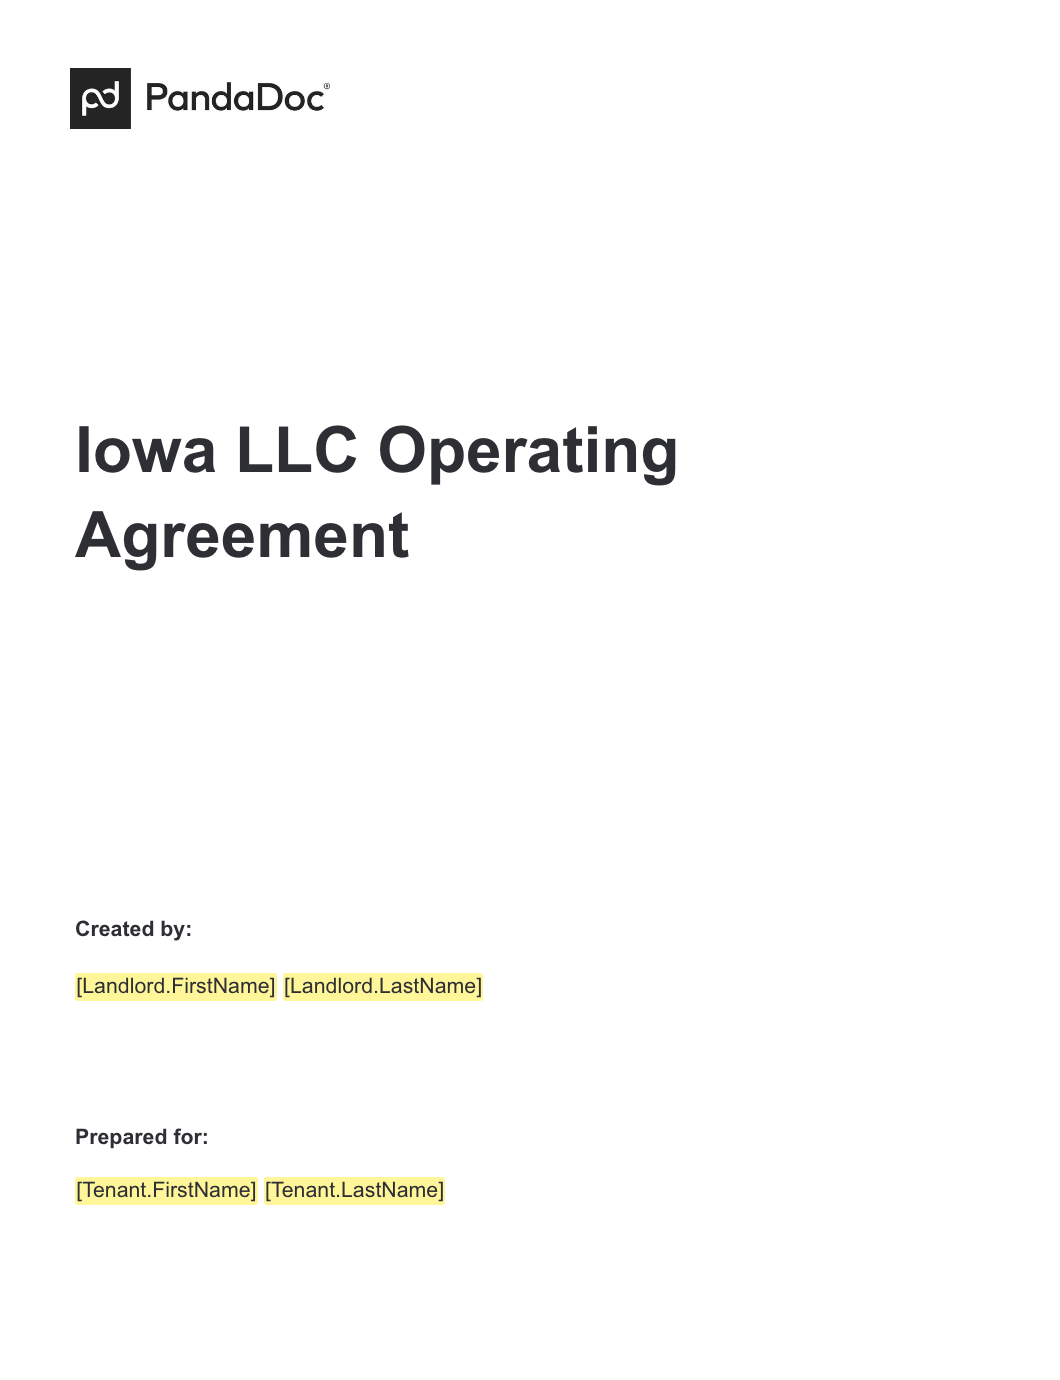 Iowa LLC Operating Agreement 